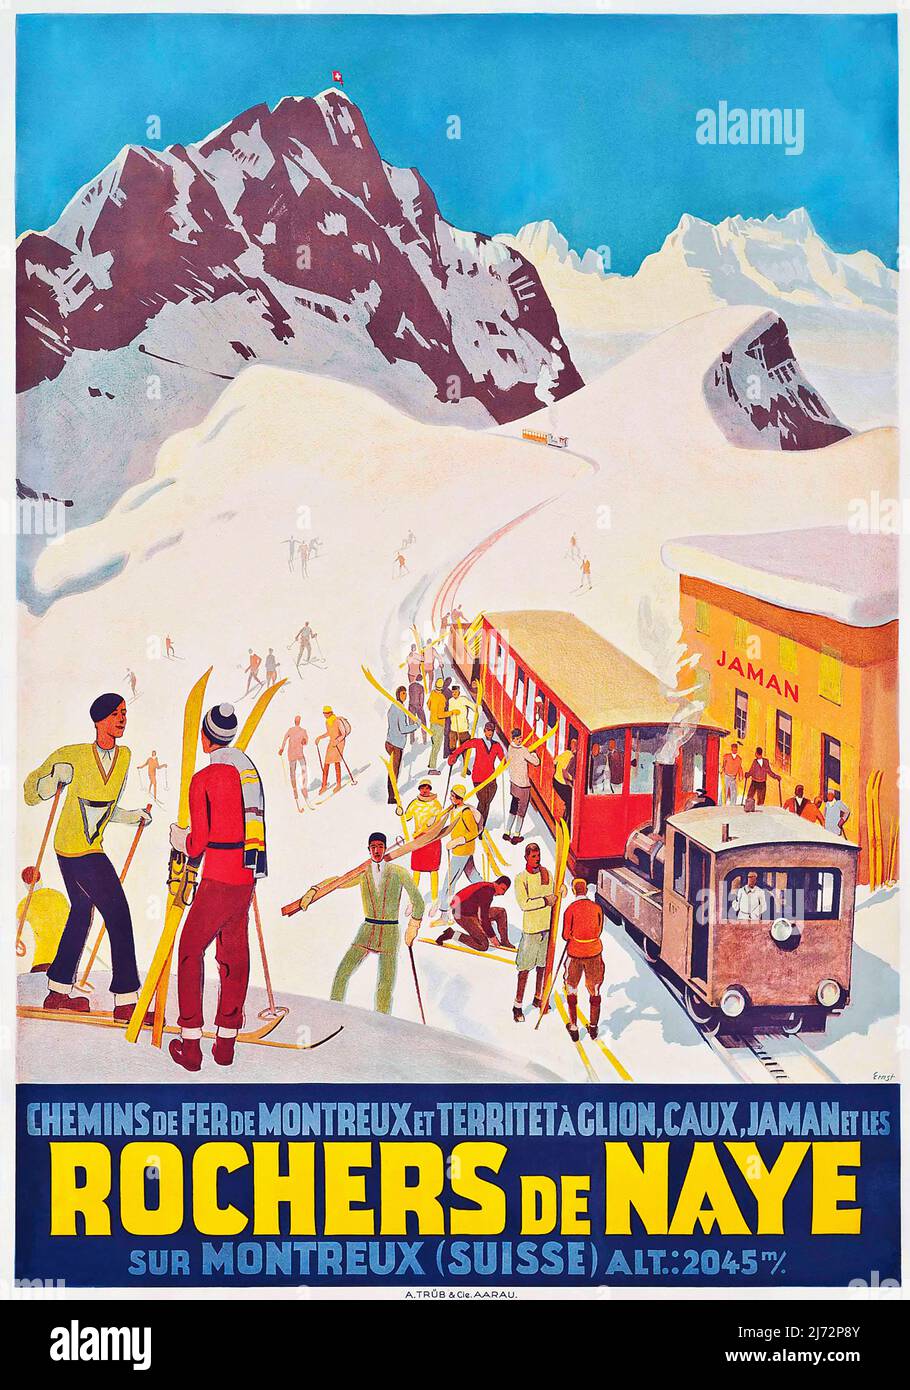 Poster Vintage 1930s - Sport invernali - otto Ernst (1884-1967) ROCHERS DE NAYE, 1930. Foto Stock